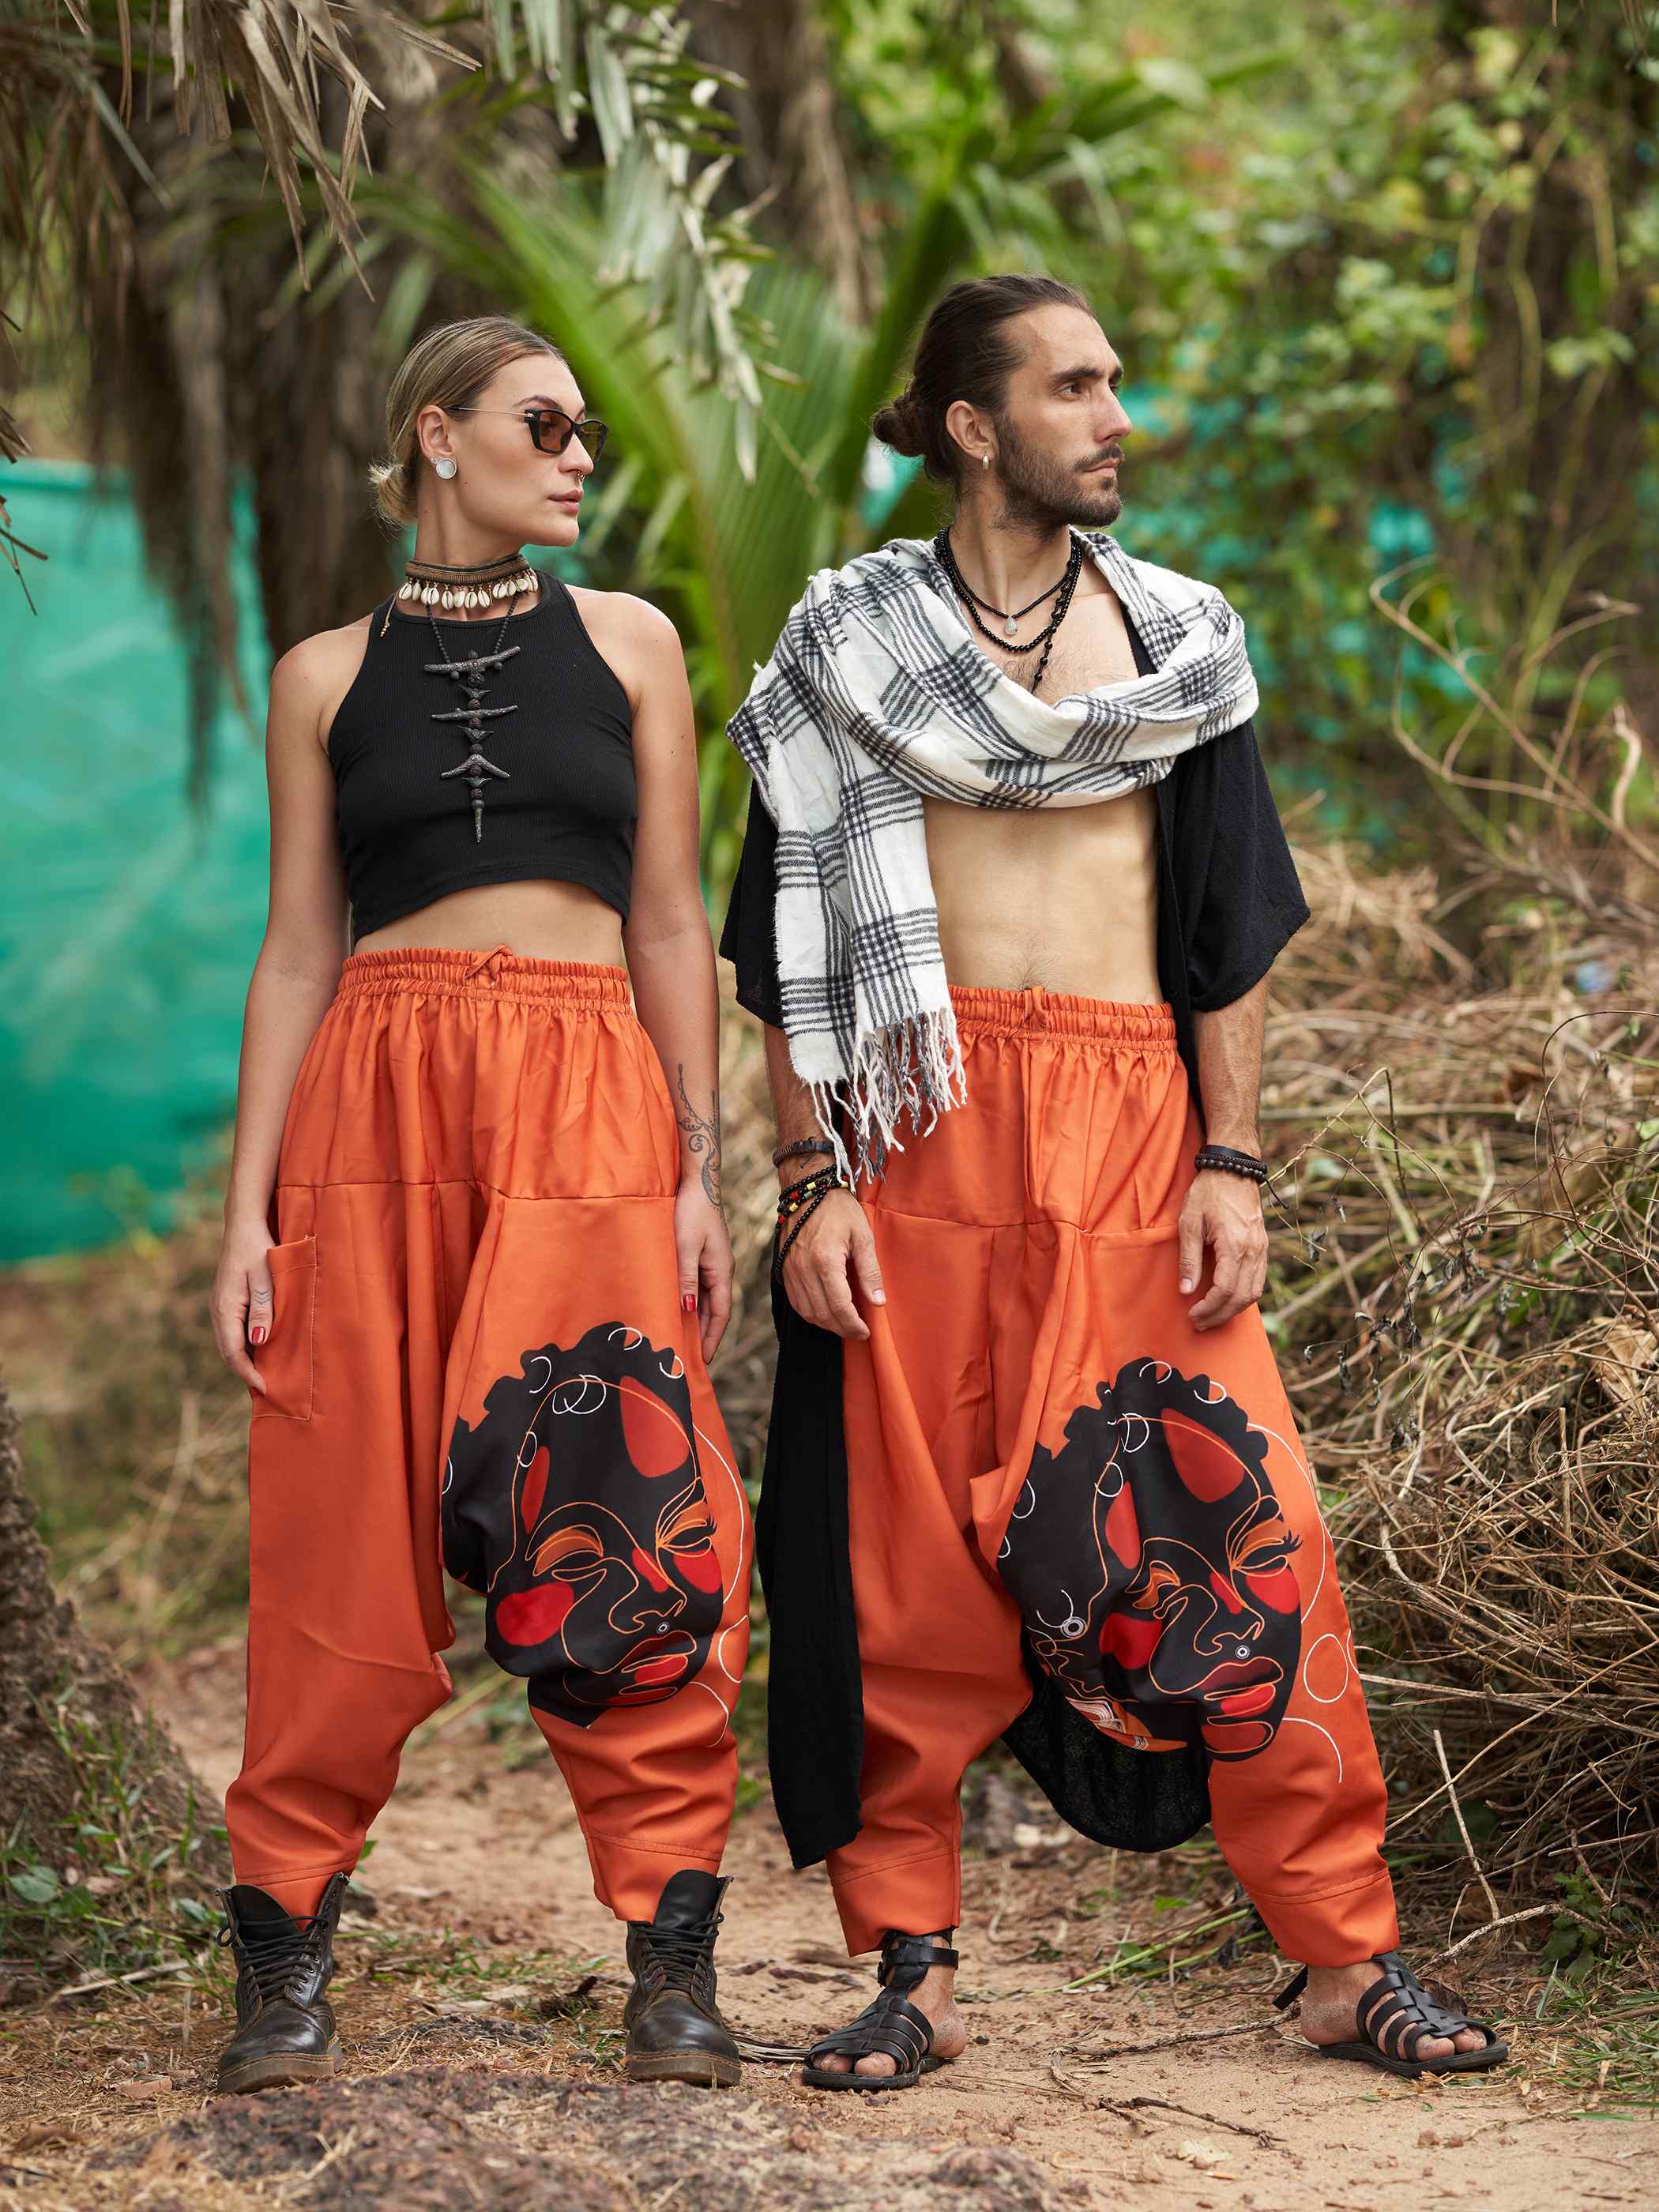 Buy PEACH PEBBLE Harem Pants Hippie Yoga Pilate Pants 100% Cotton Pants,  Bricks, One Size at Amazon.in